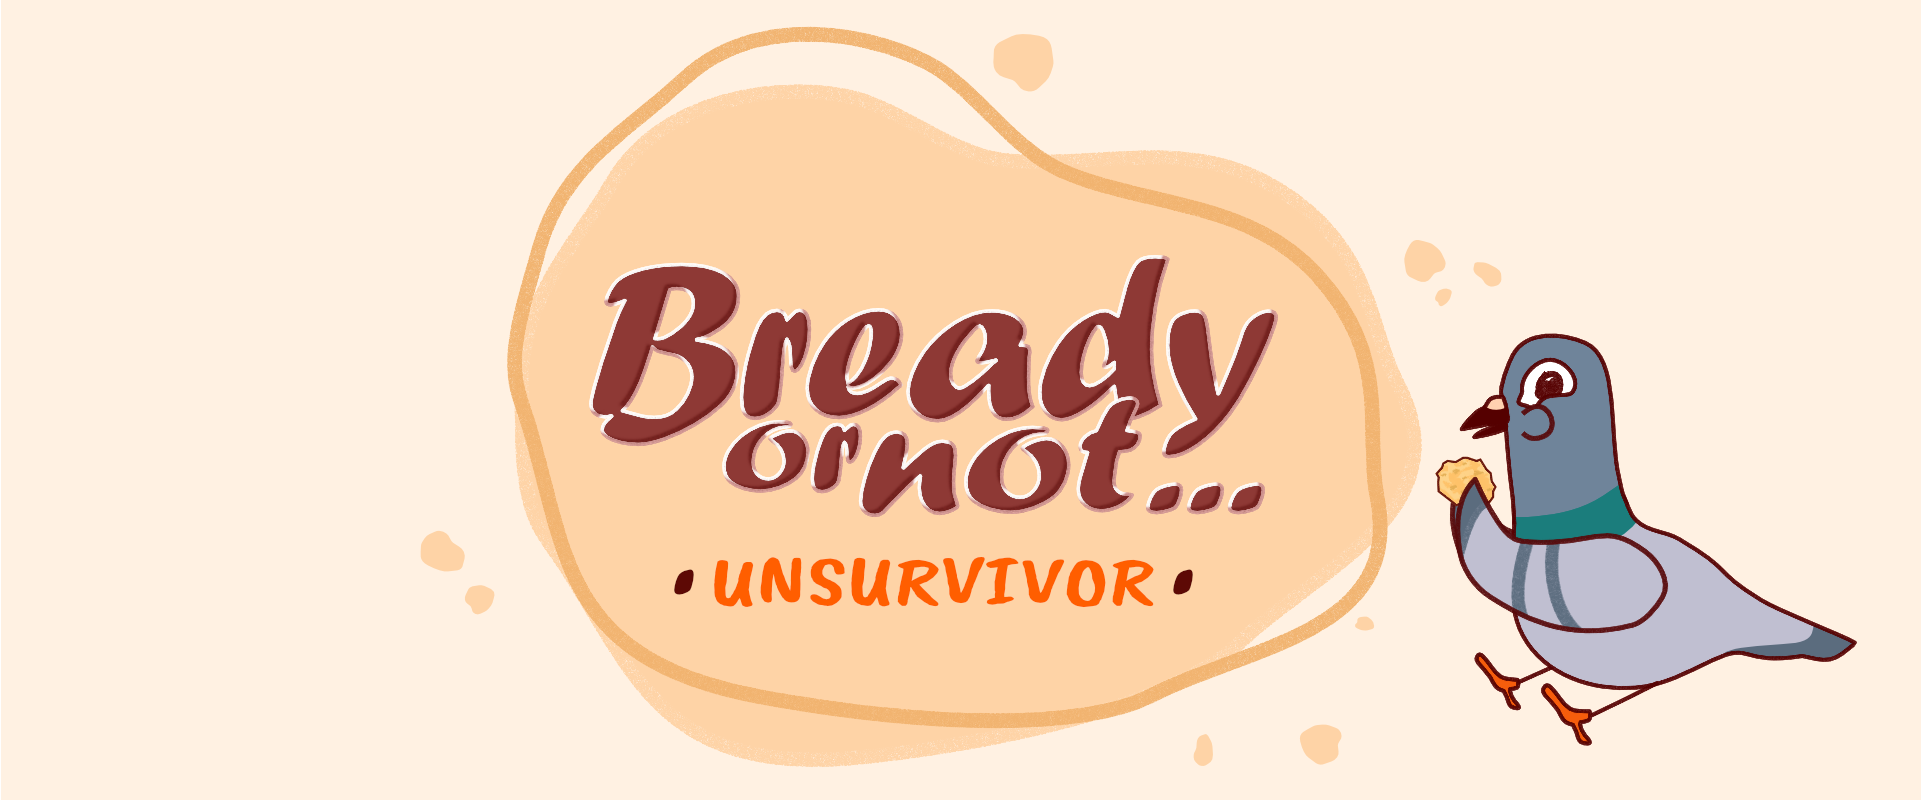 Bready or not - unSURVIVOR